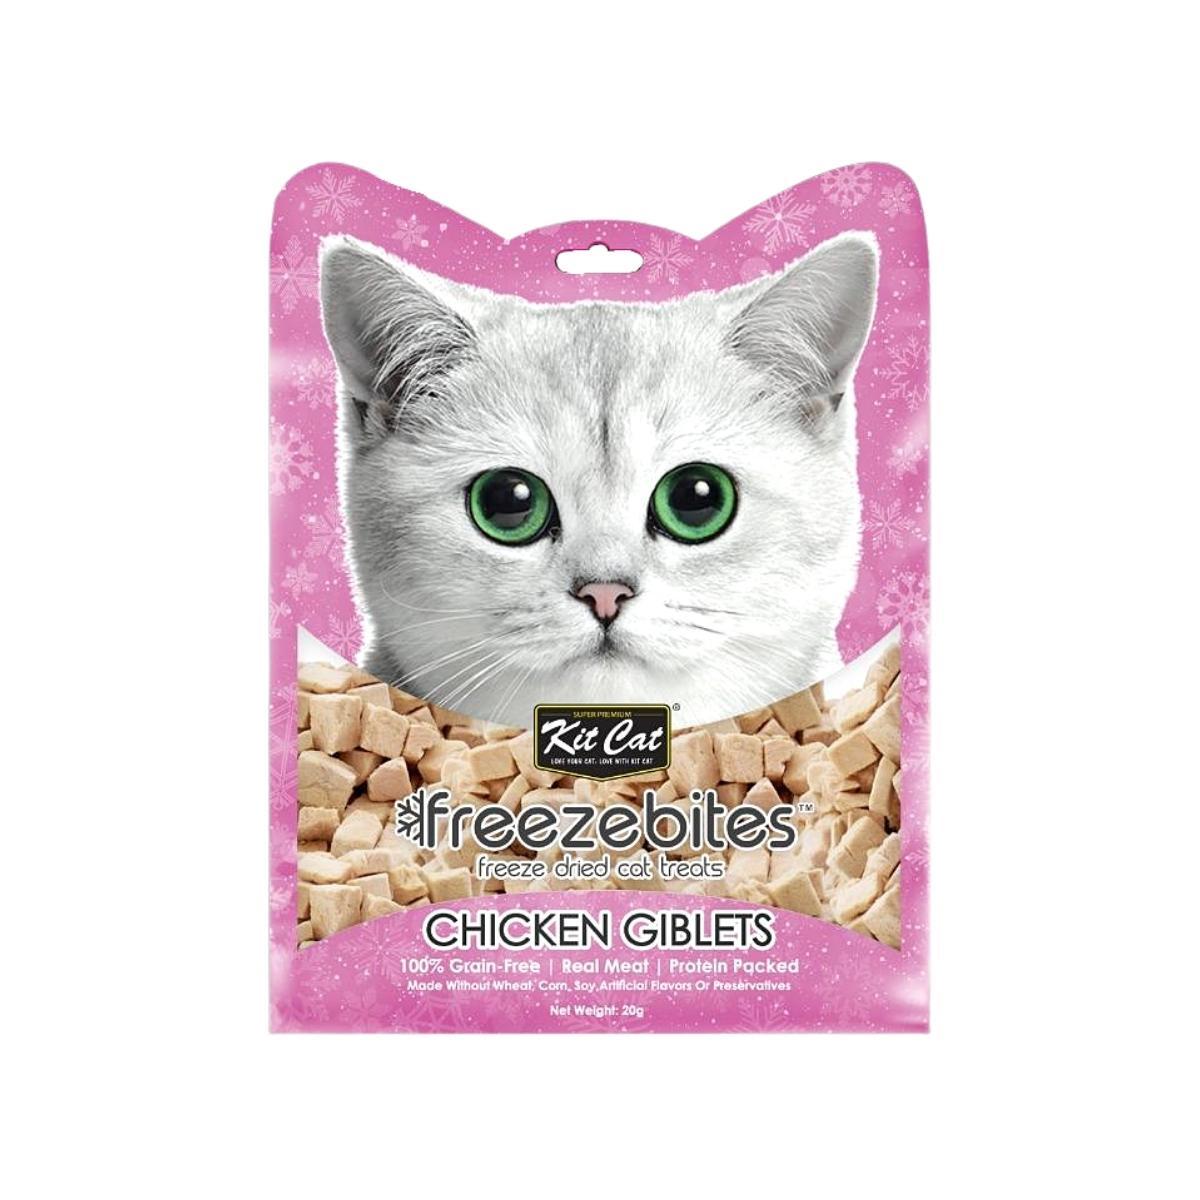 Kit Cat Freeze Bites Chicken Giblets, 20g